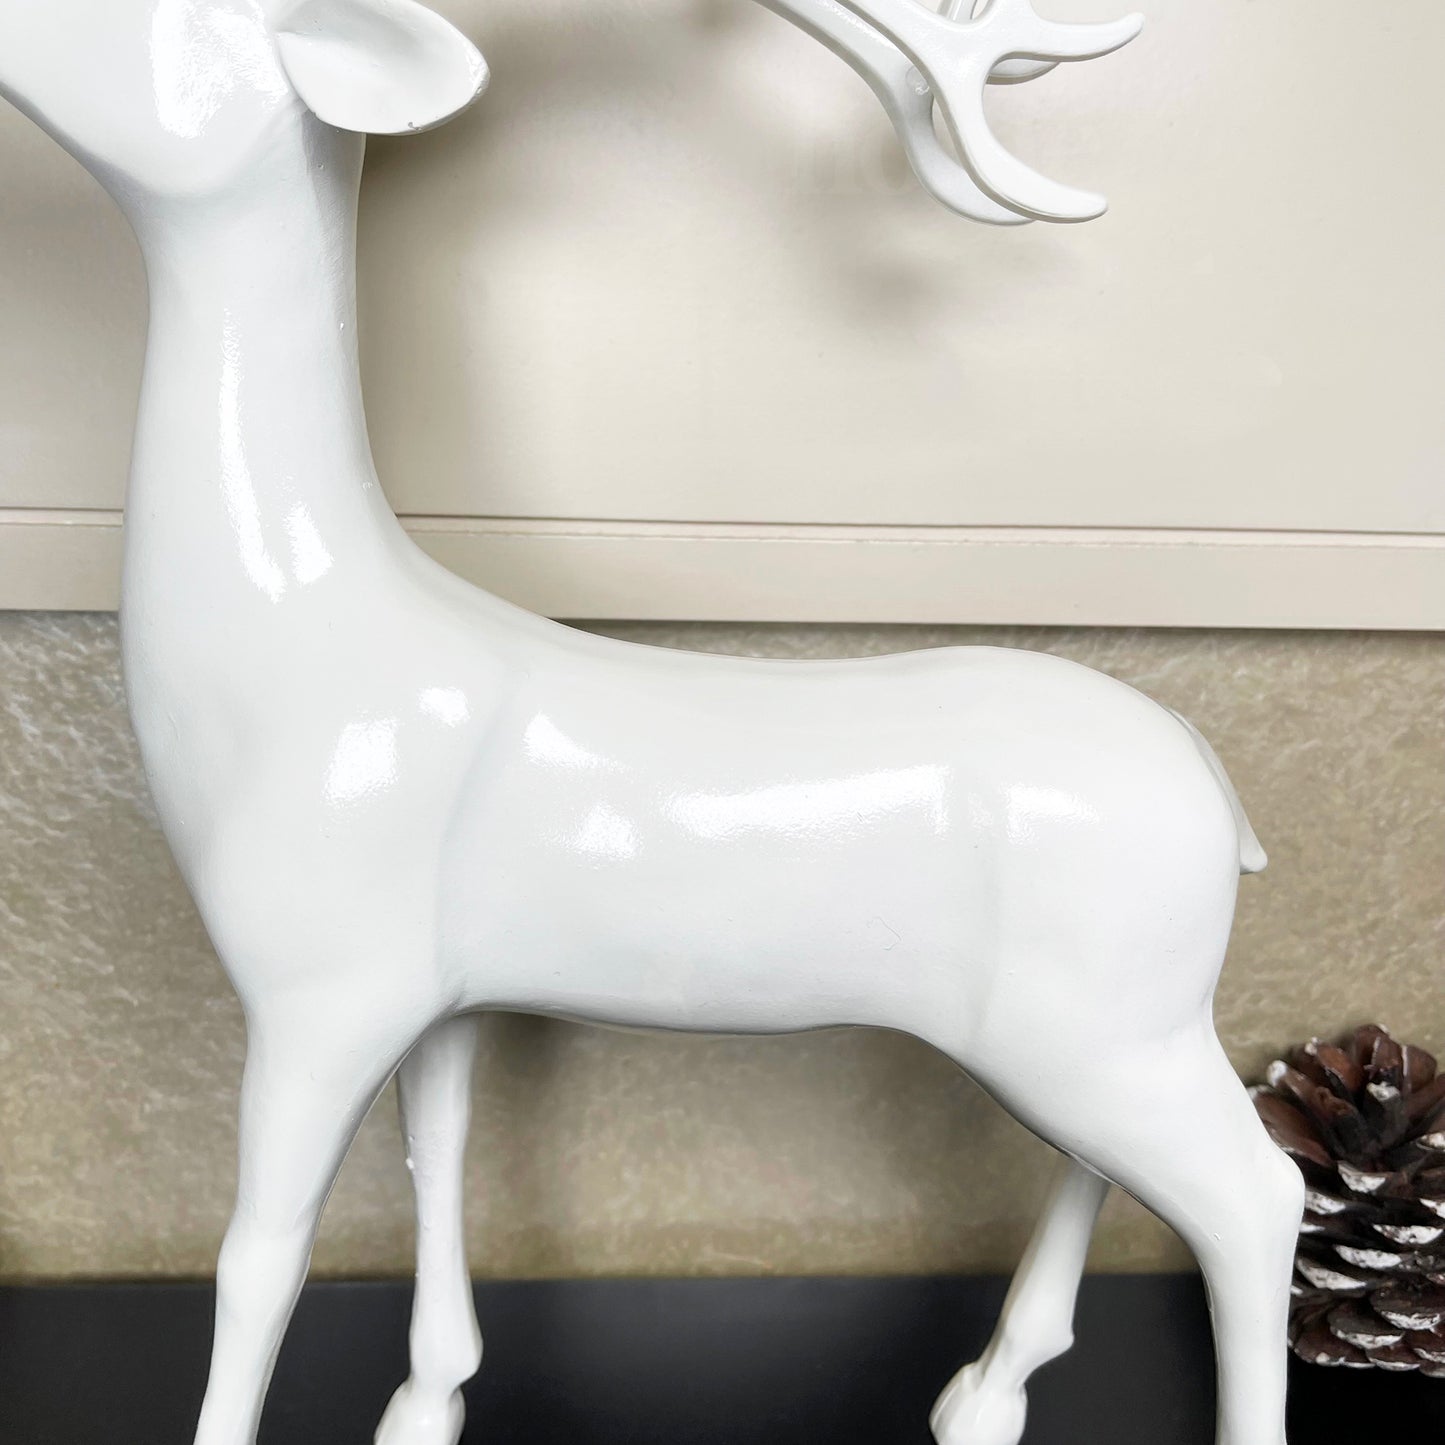 Nordic Glossy White Stag Ornament 21x32cm